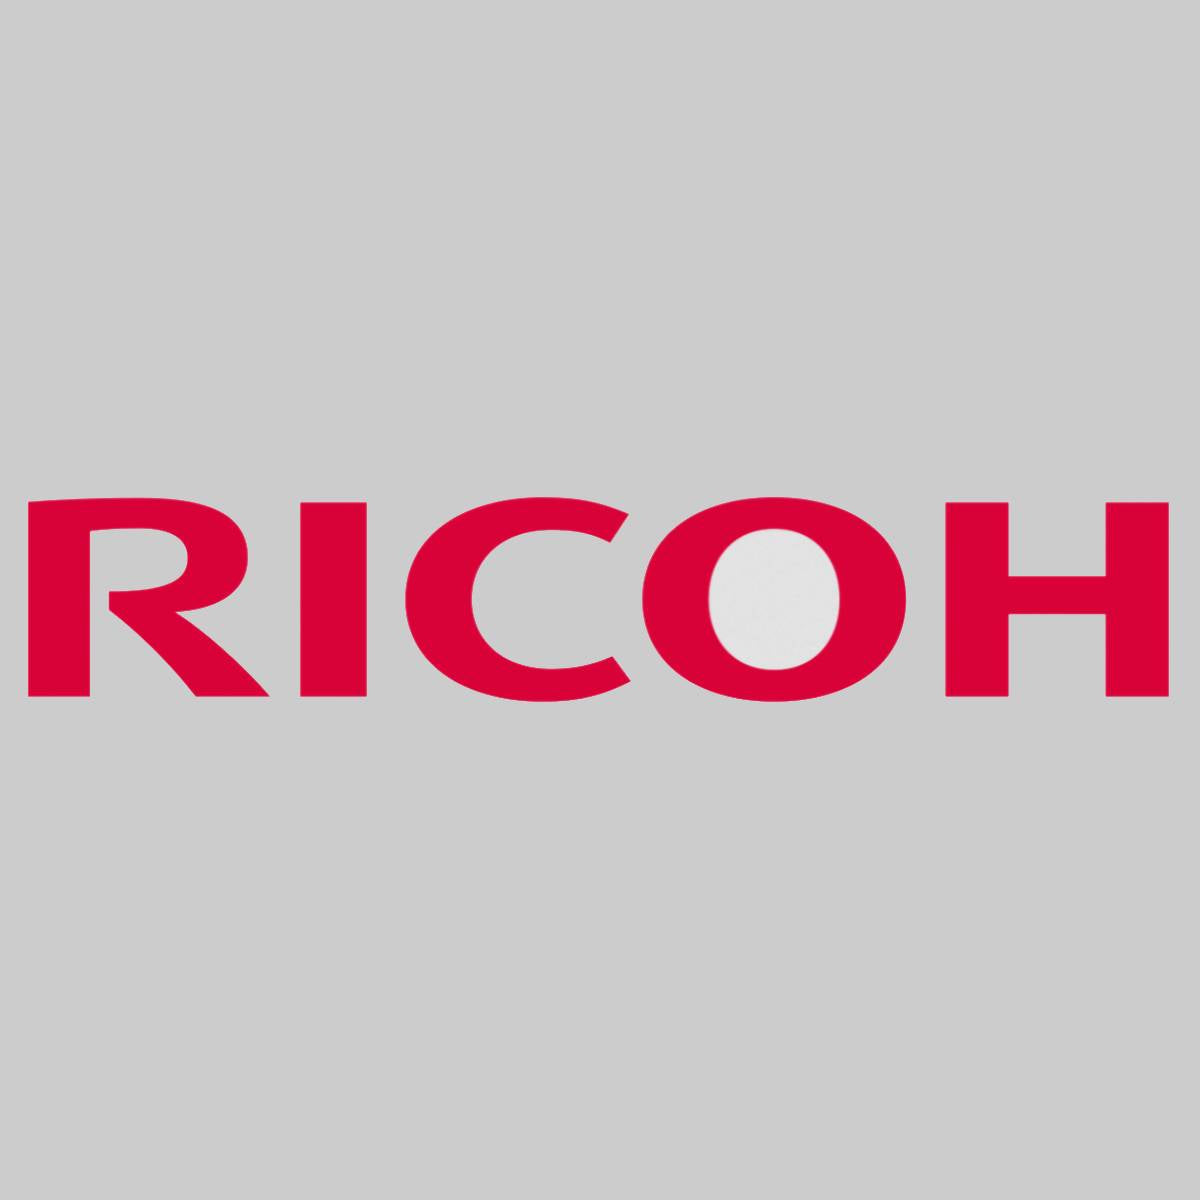 "Original Ricoh Toner Magenta 842285 for Ricoh IM C4500 C4500A C5500 C6000 NEW